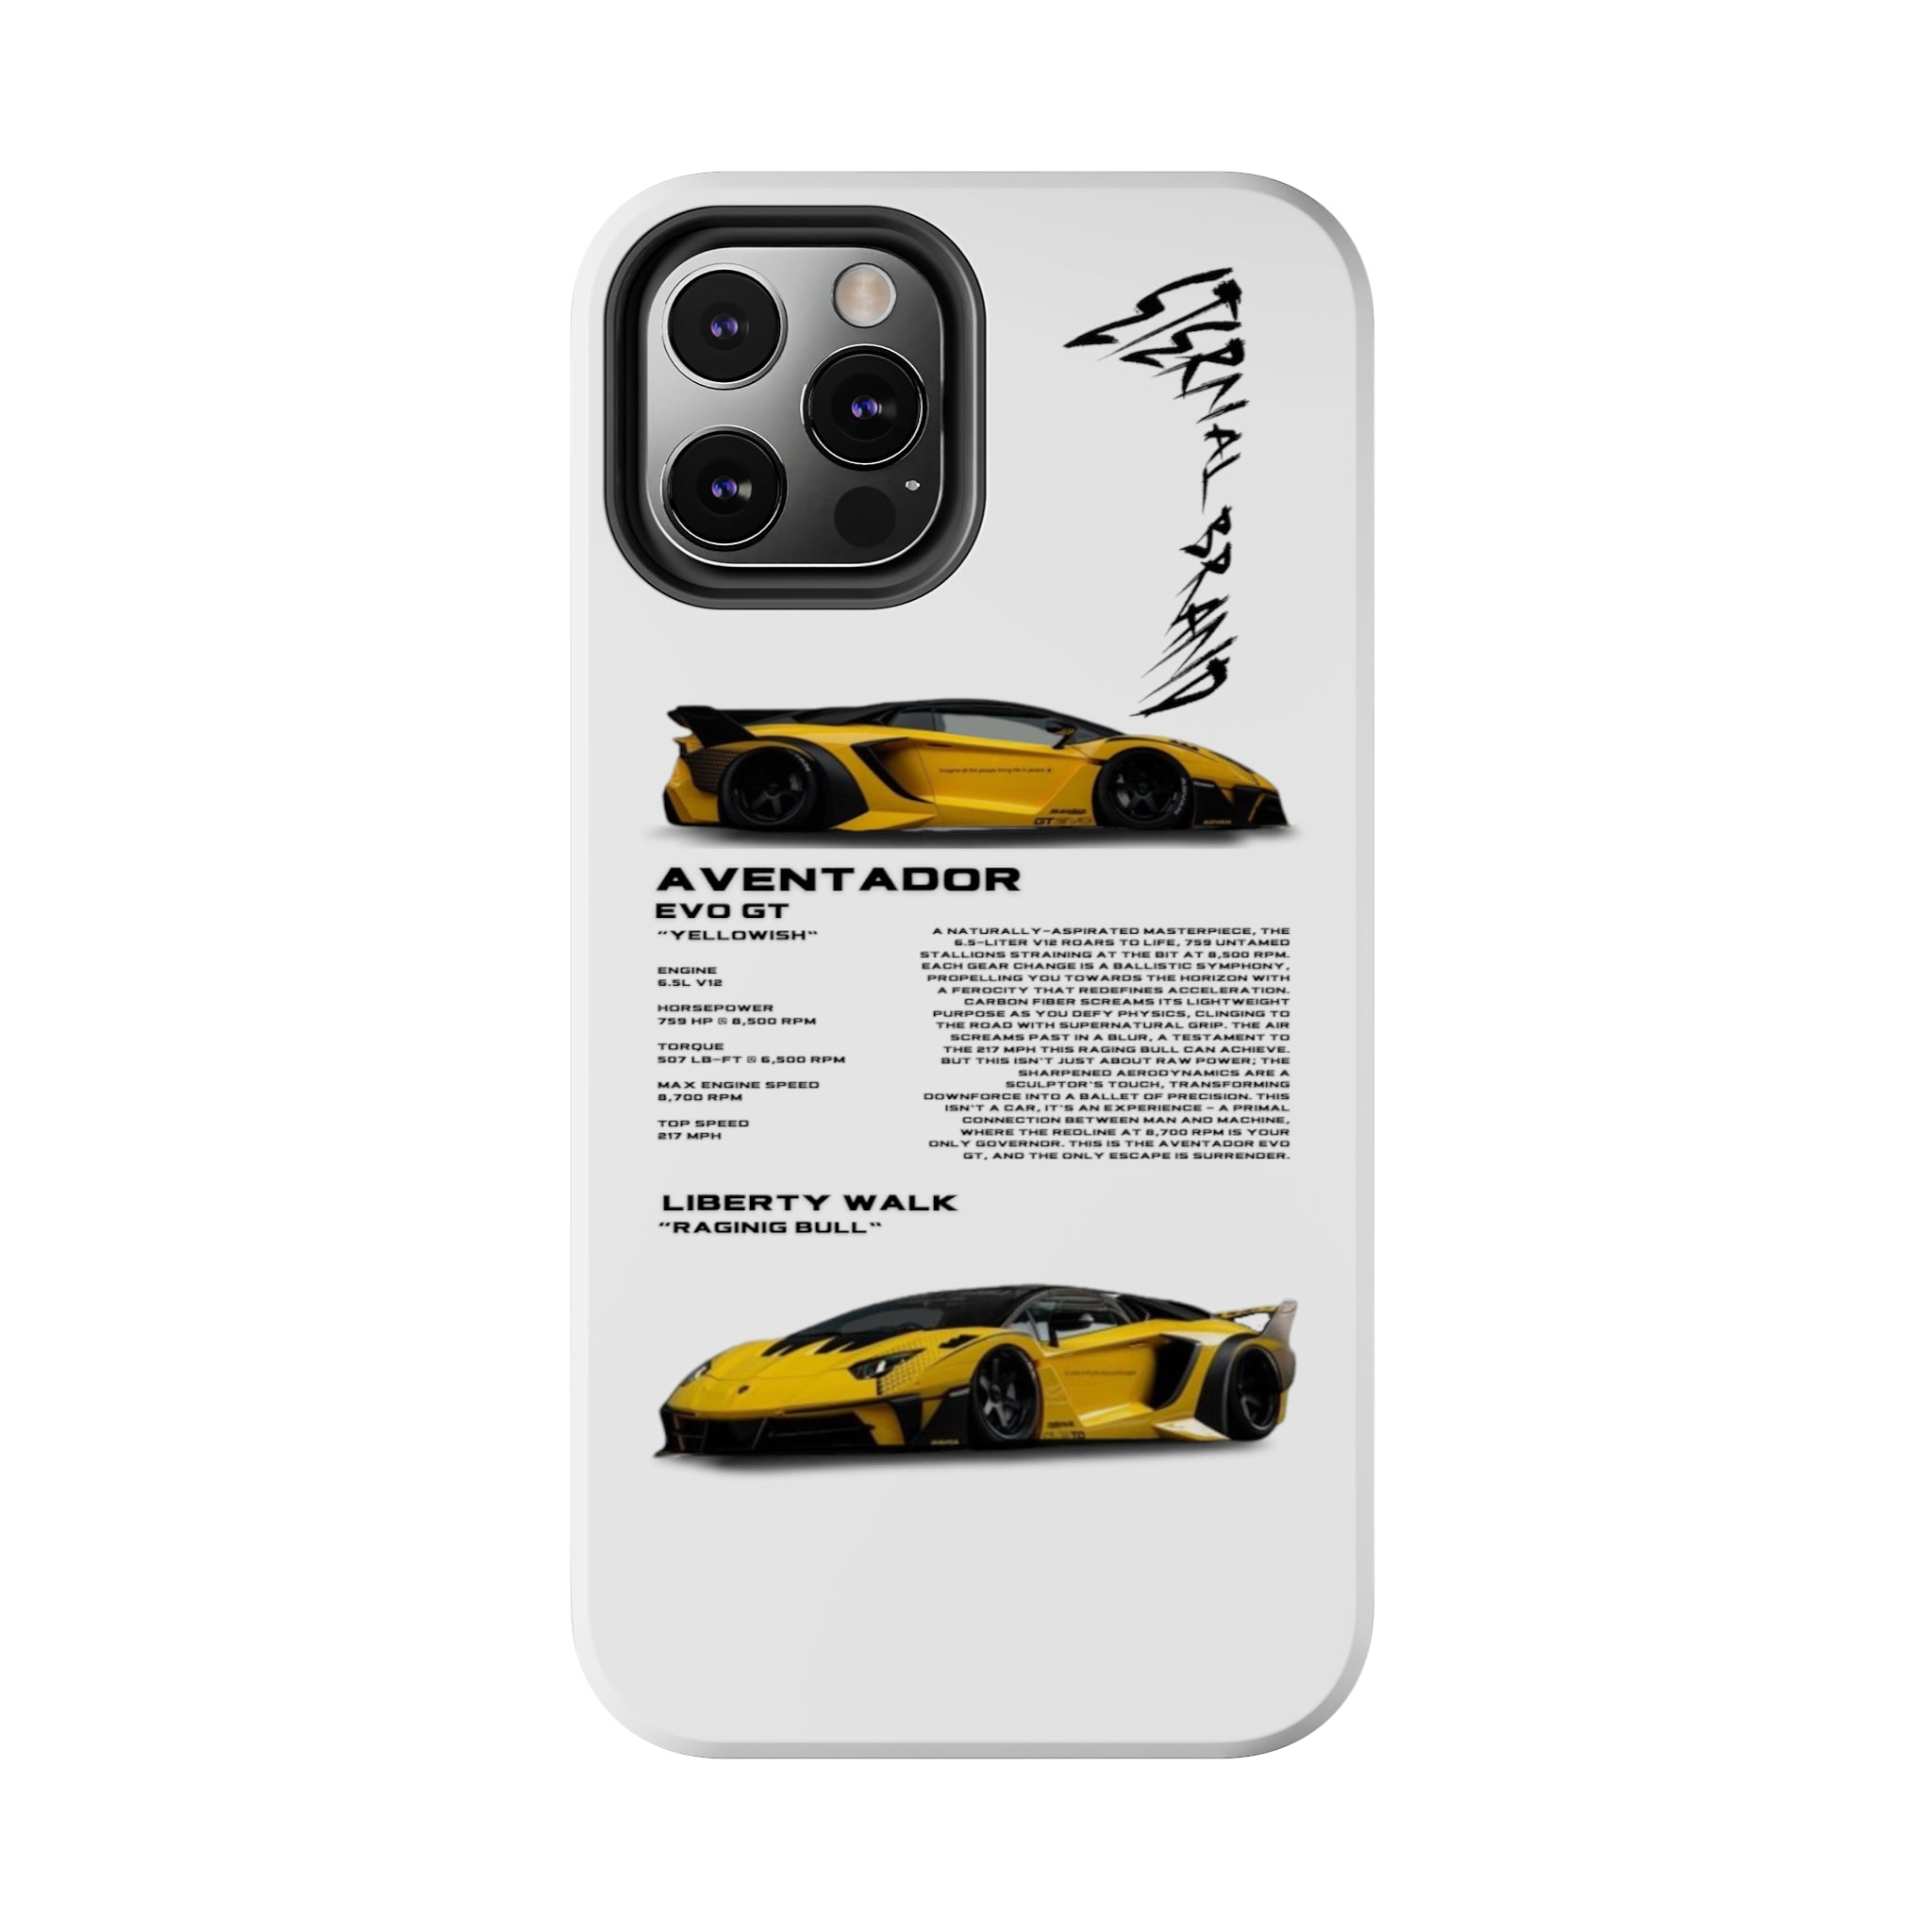 Aventador EVO GT "Yellowish" "White"